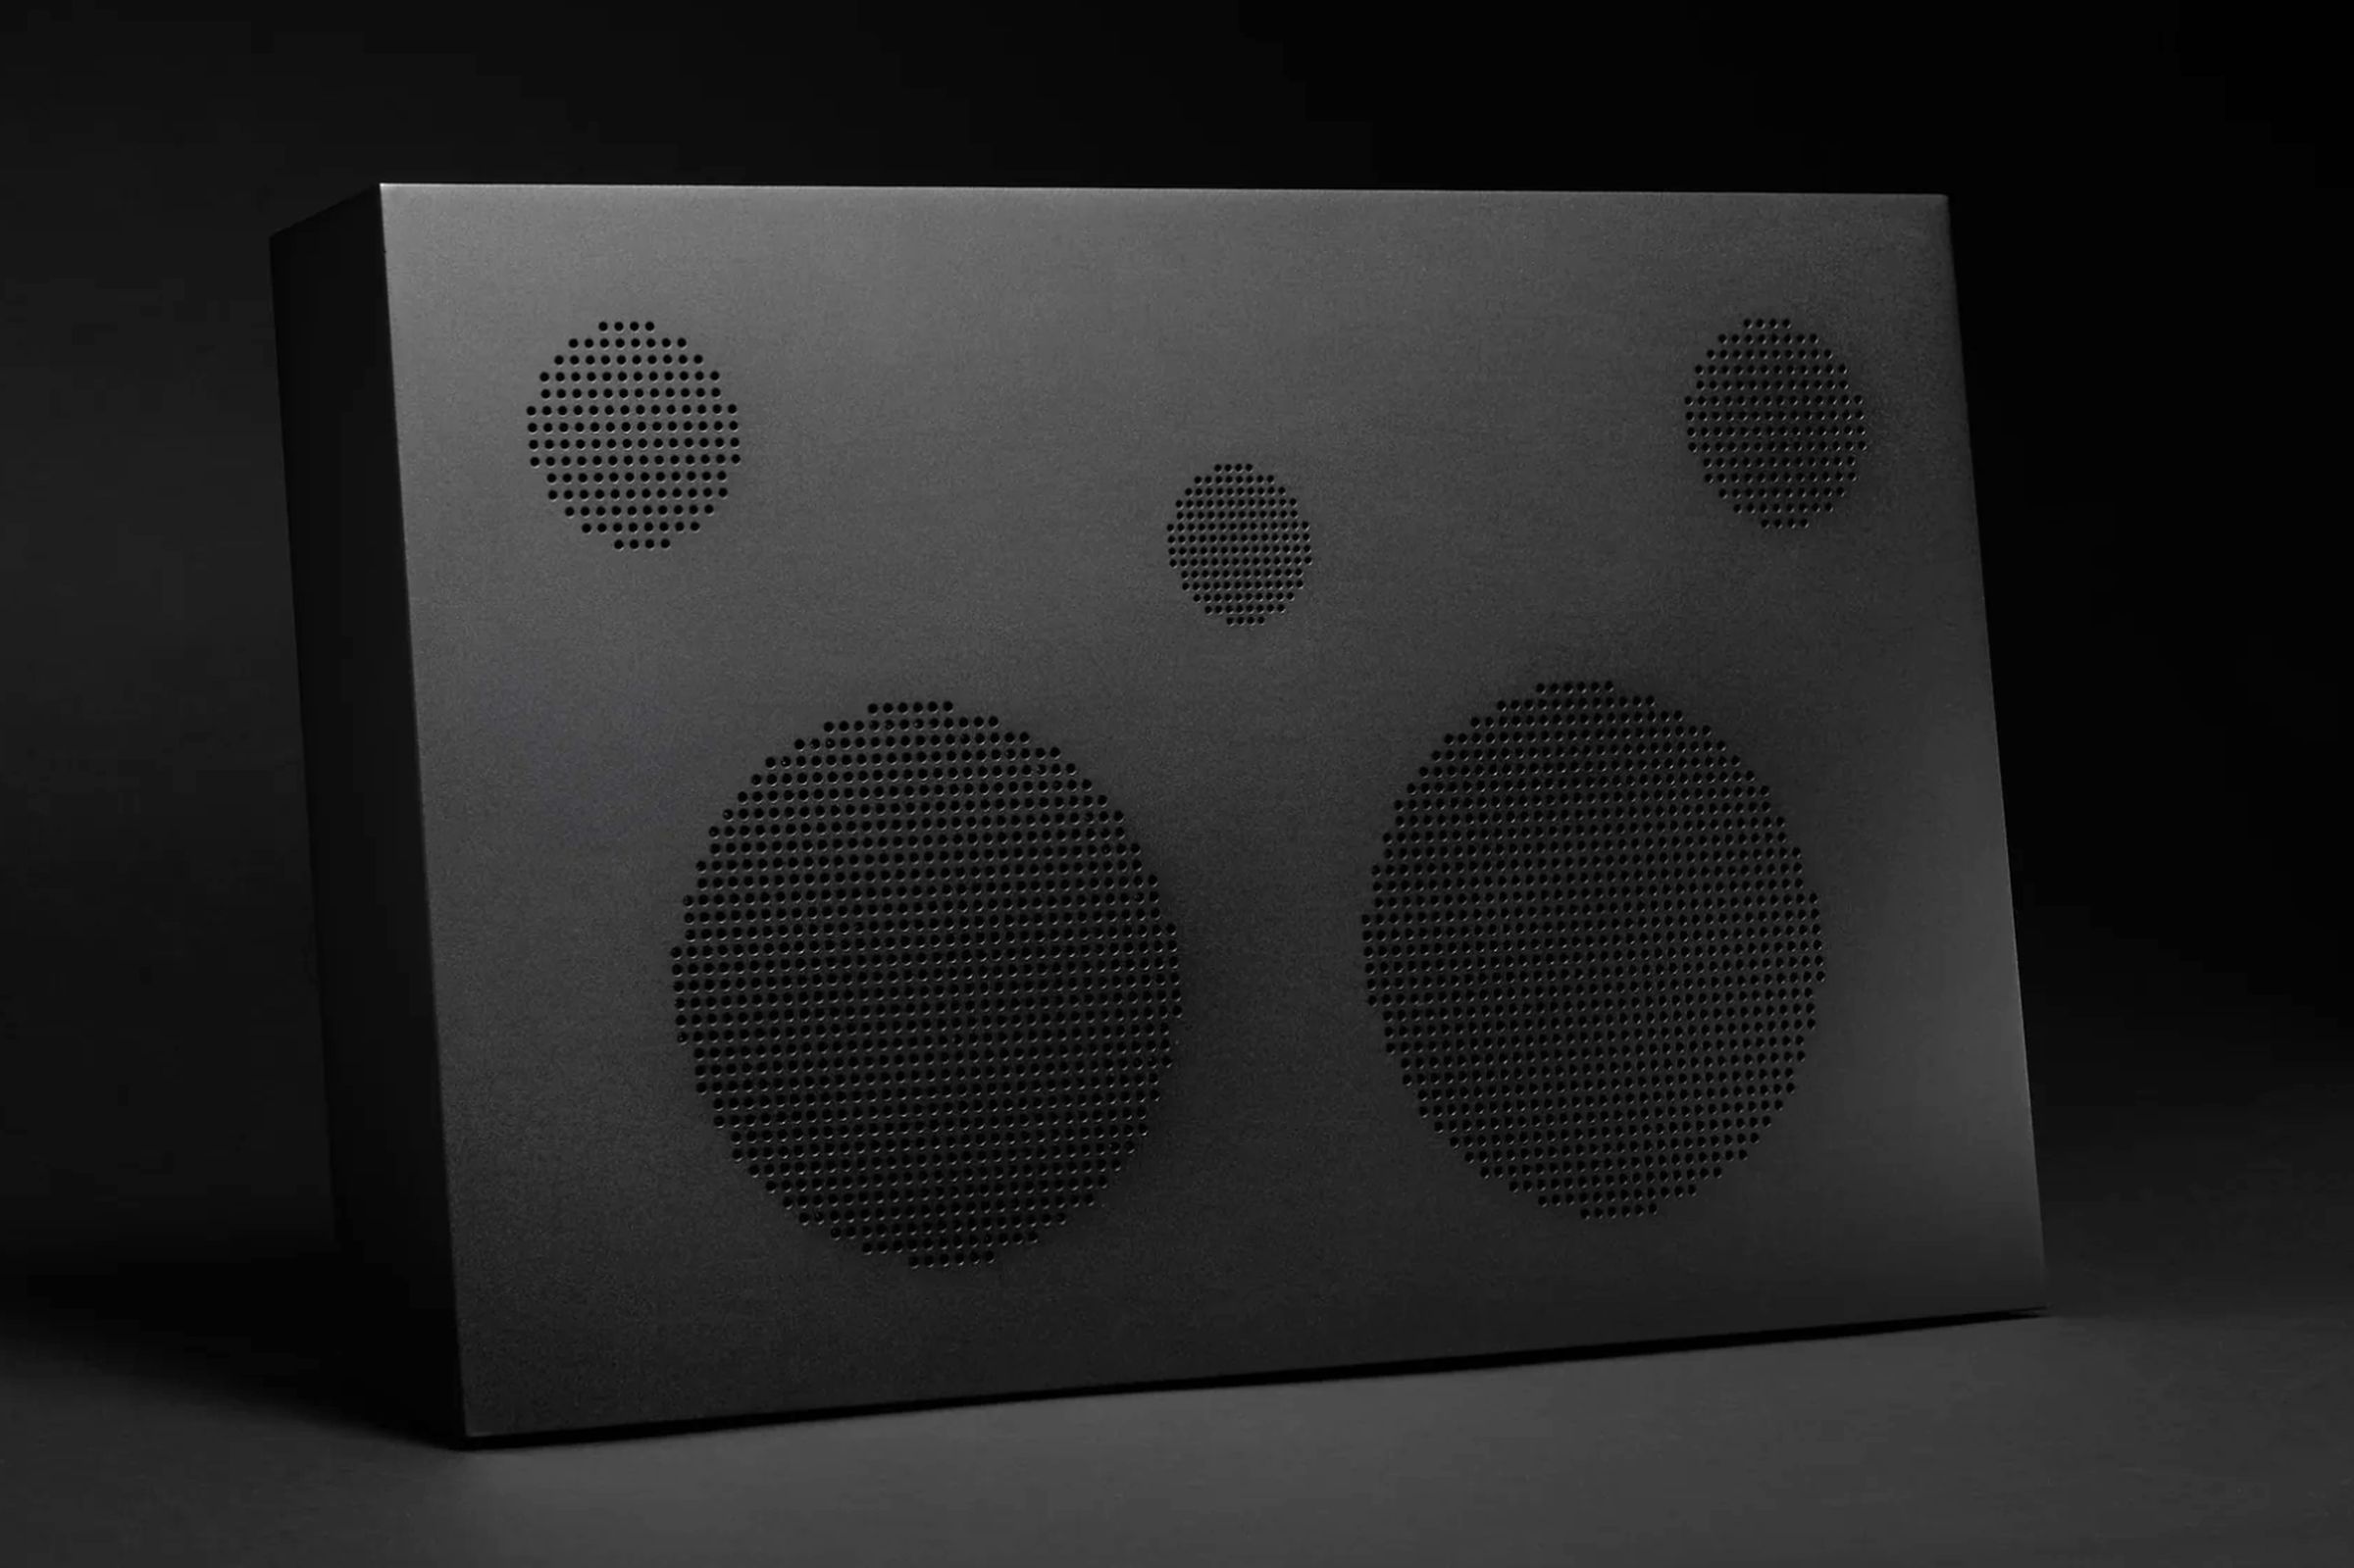 The all-metal Nocs Labs Monolith x Aluminum speaker in a matte black finish.